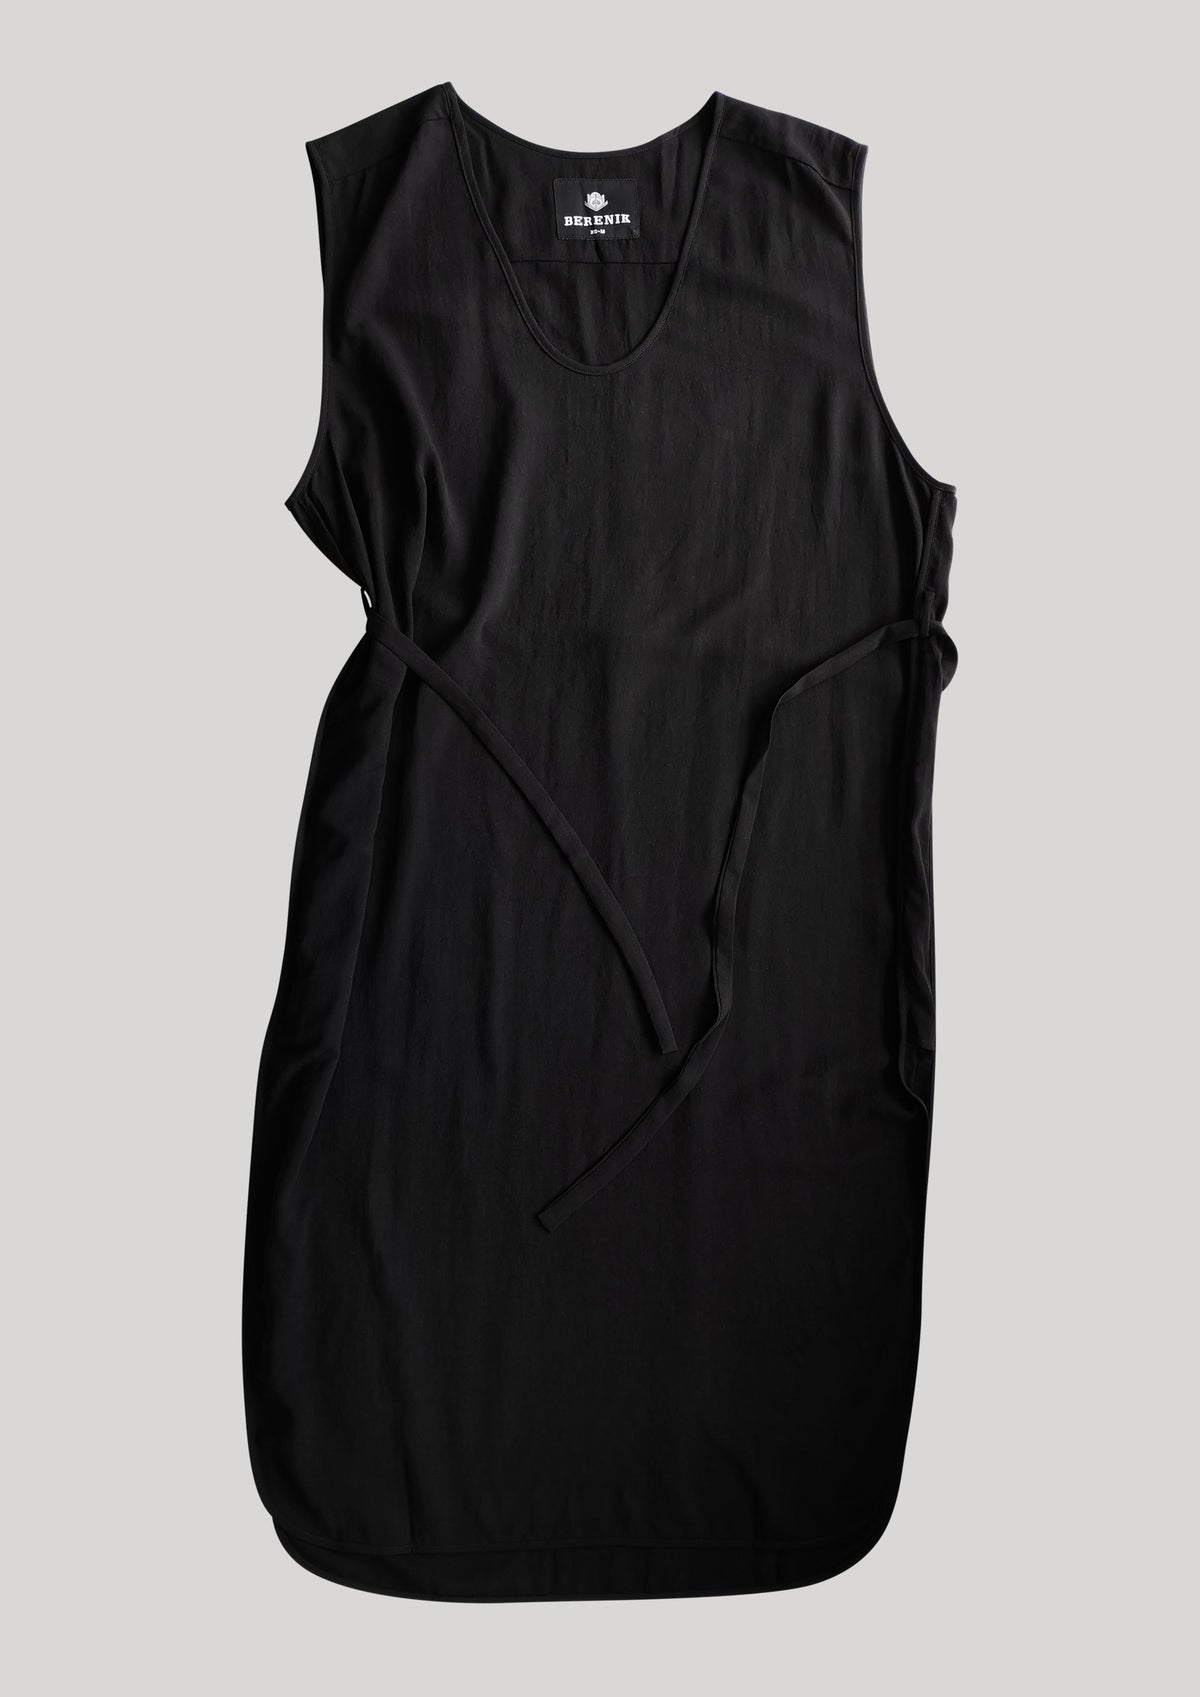 DRESS SLEEVELESS - black plain by BERENIK